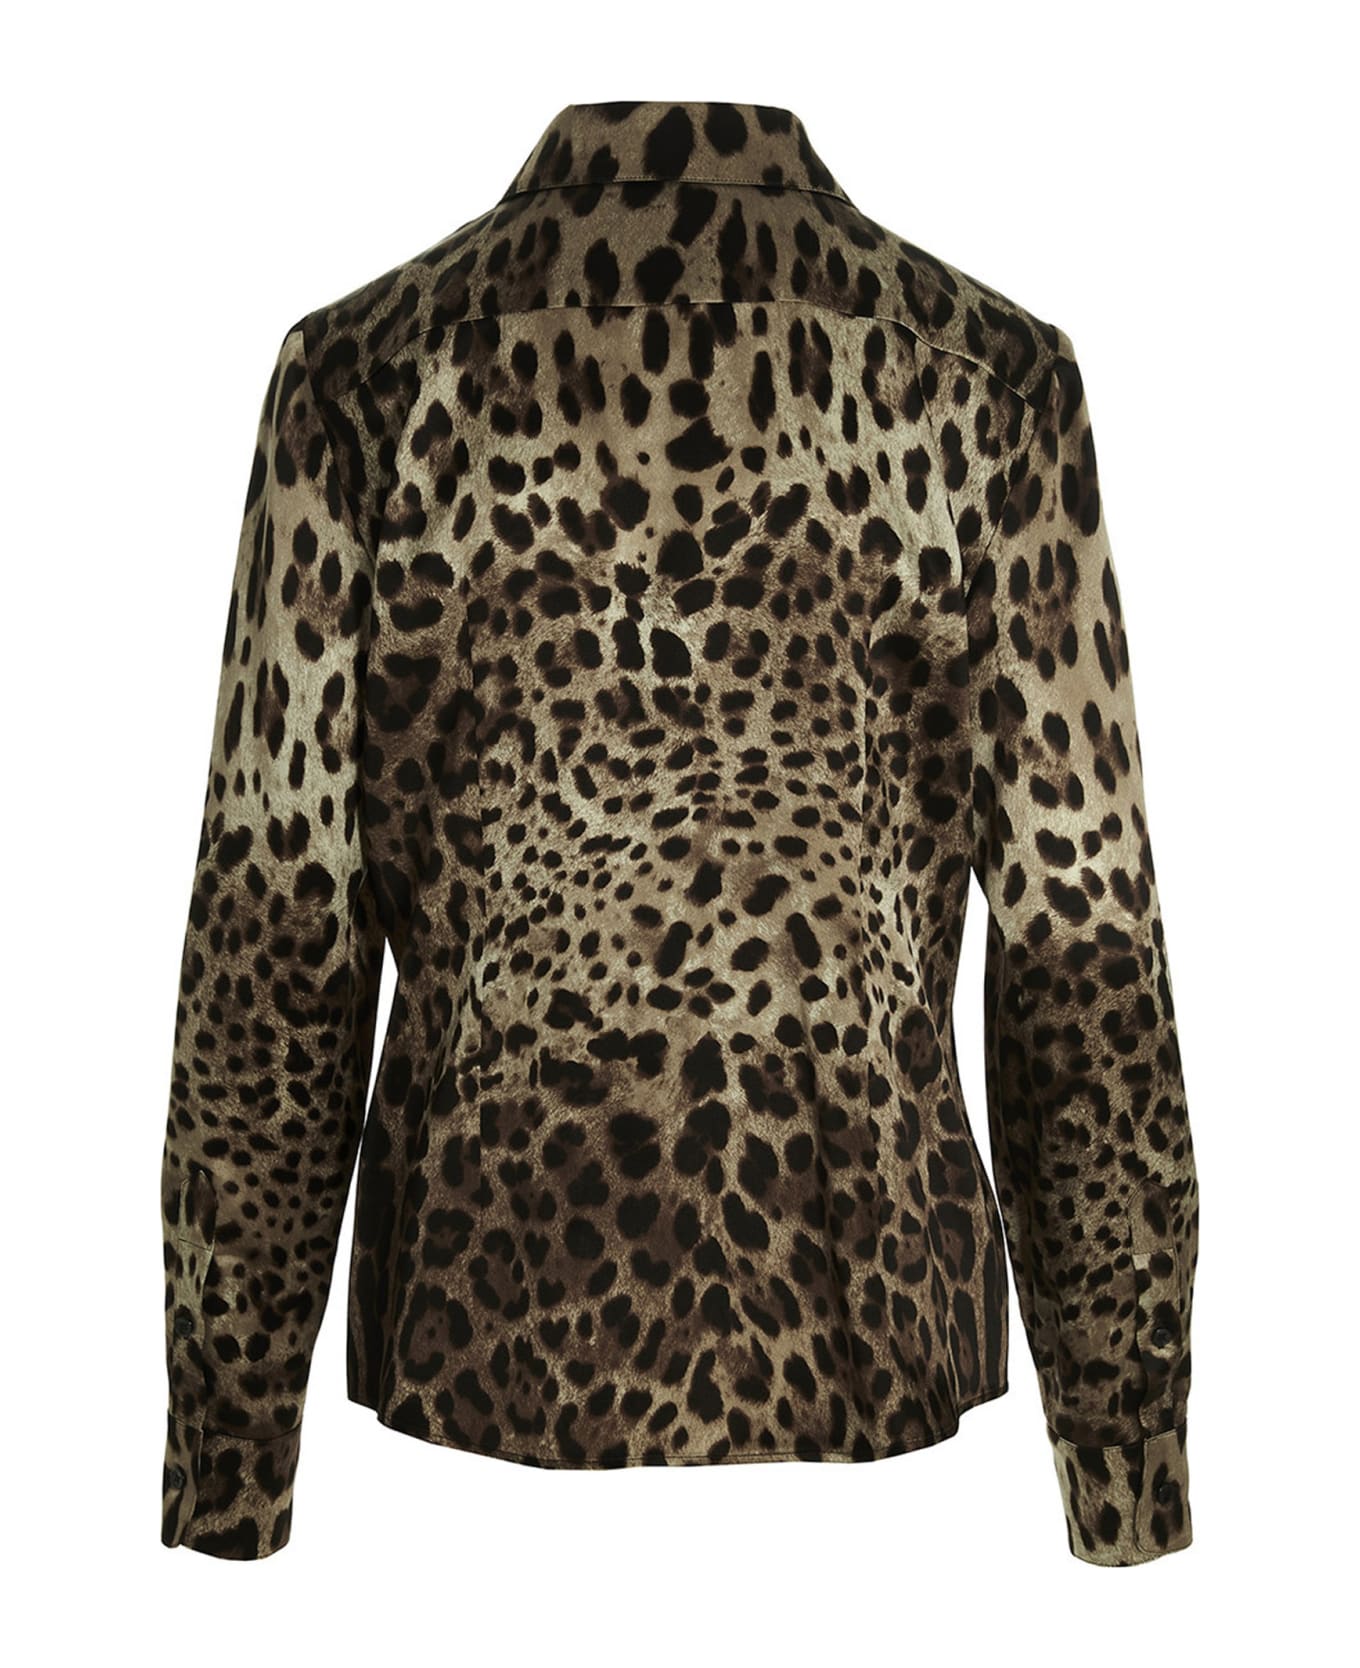 Dolce Taschen & Gabbana Animal Print Shirt - Brown